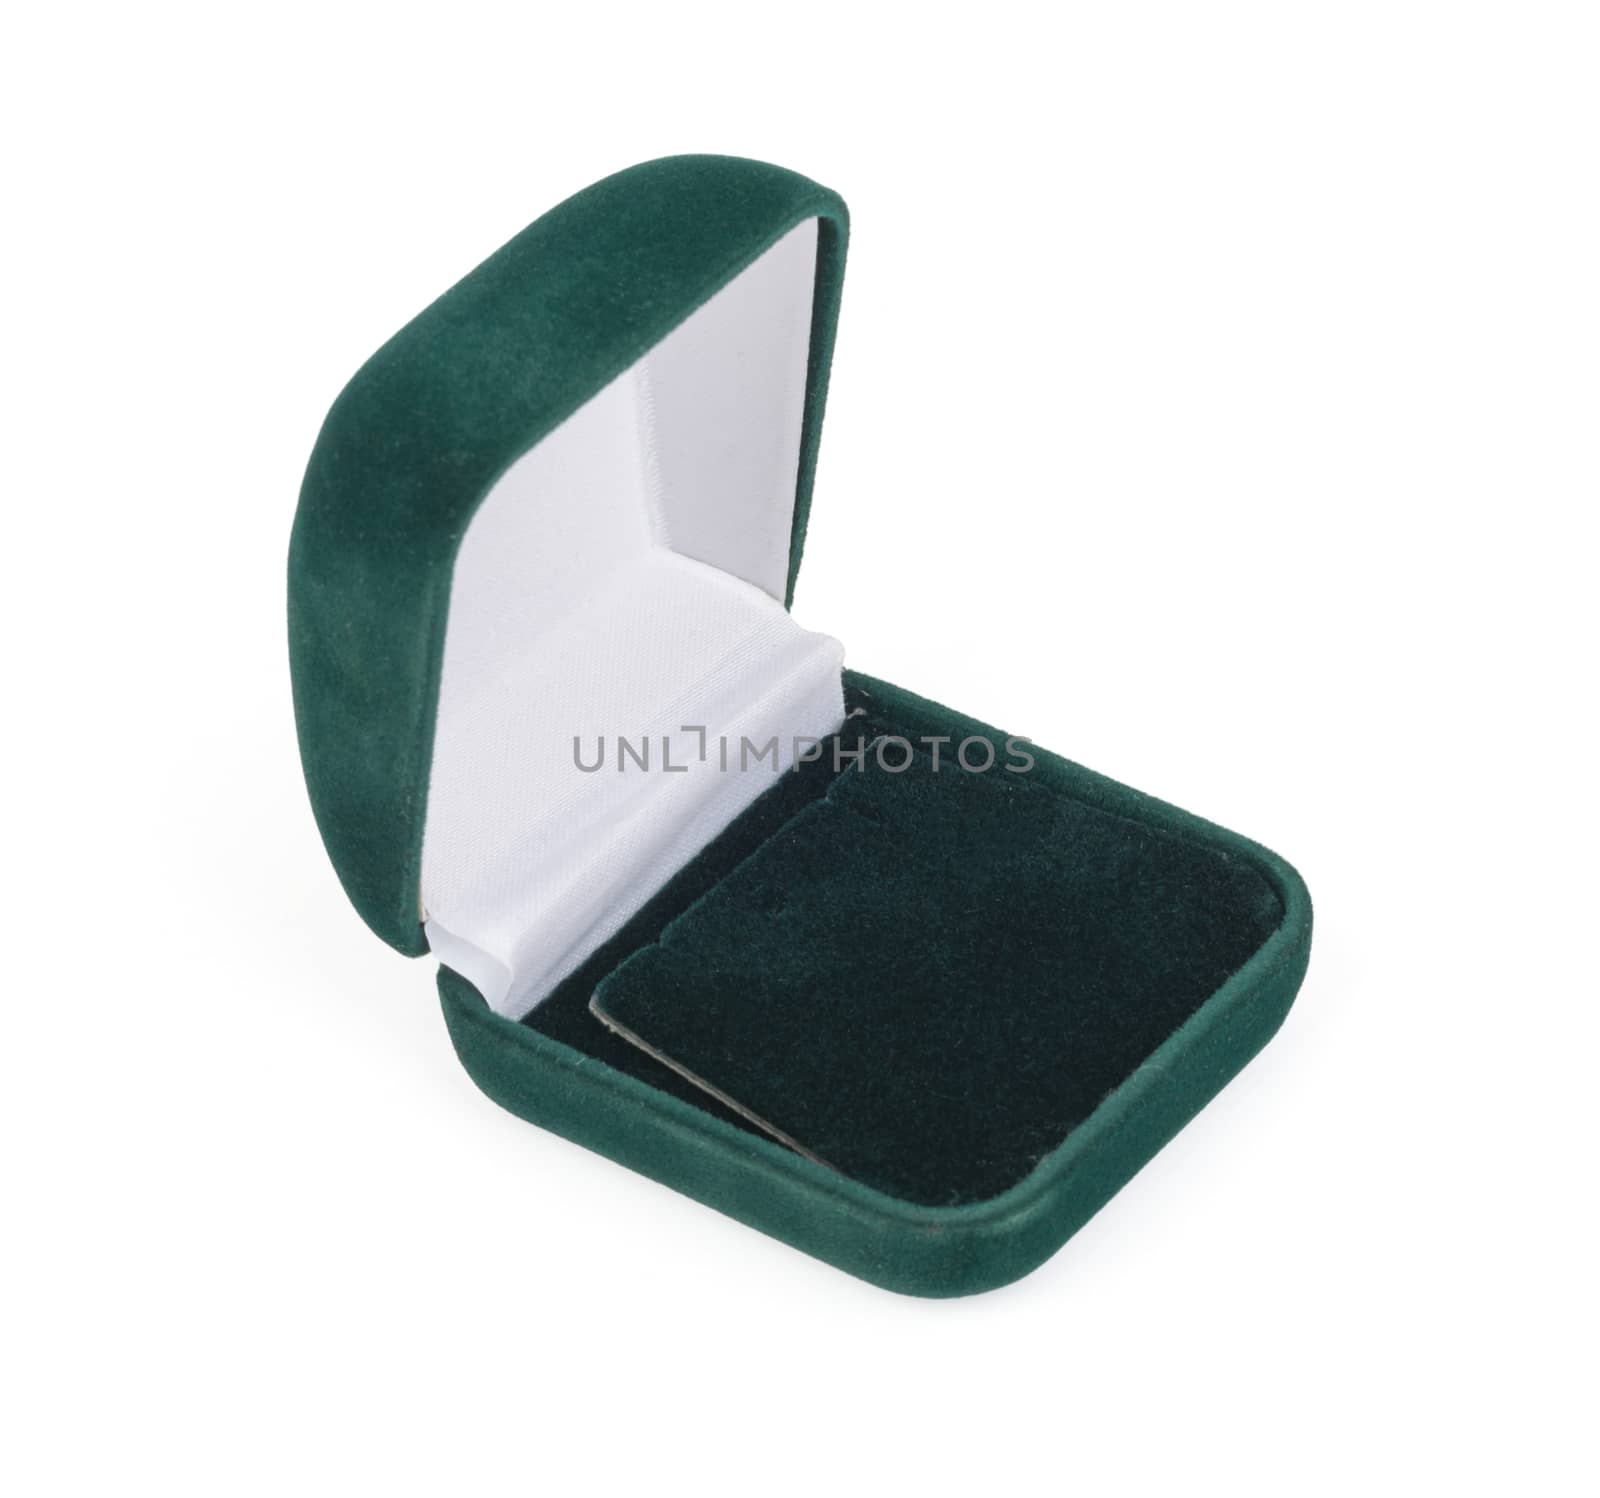 Empty ring box on isolated white background